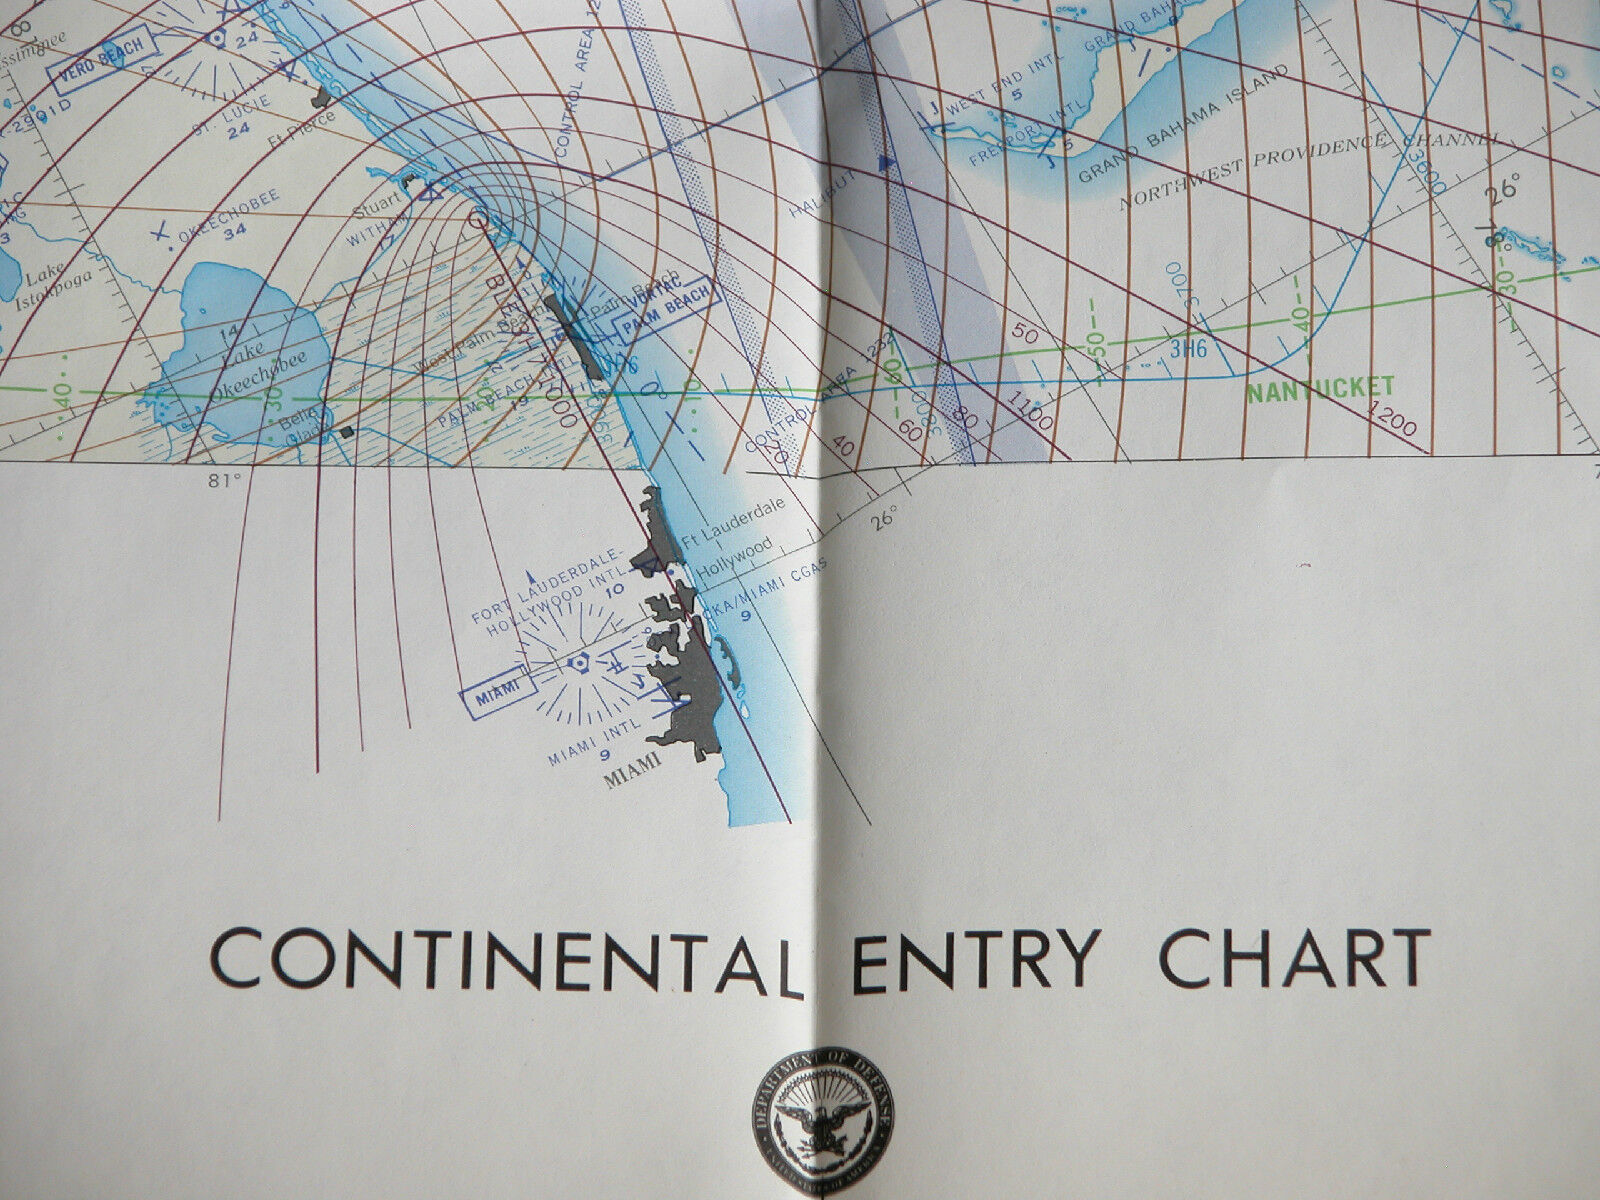 VTG Air Force Continental Entry Chart Map Dep. of Defense Nantucket 1961 